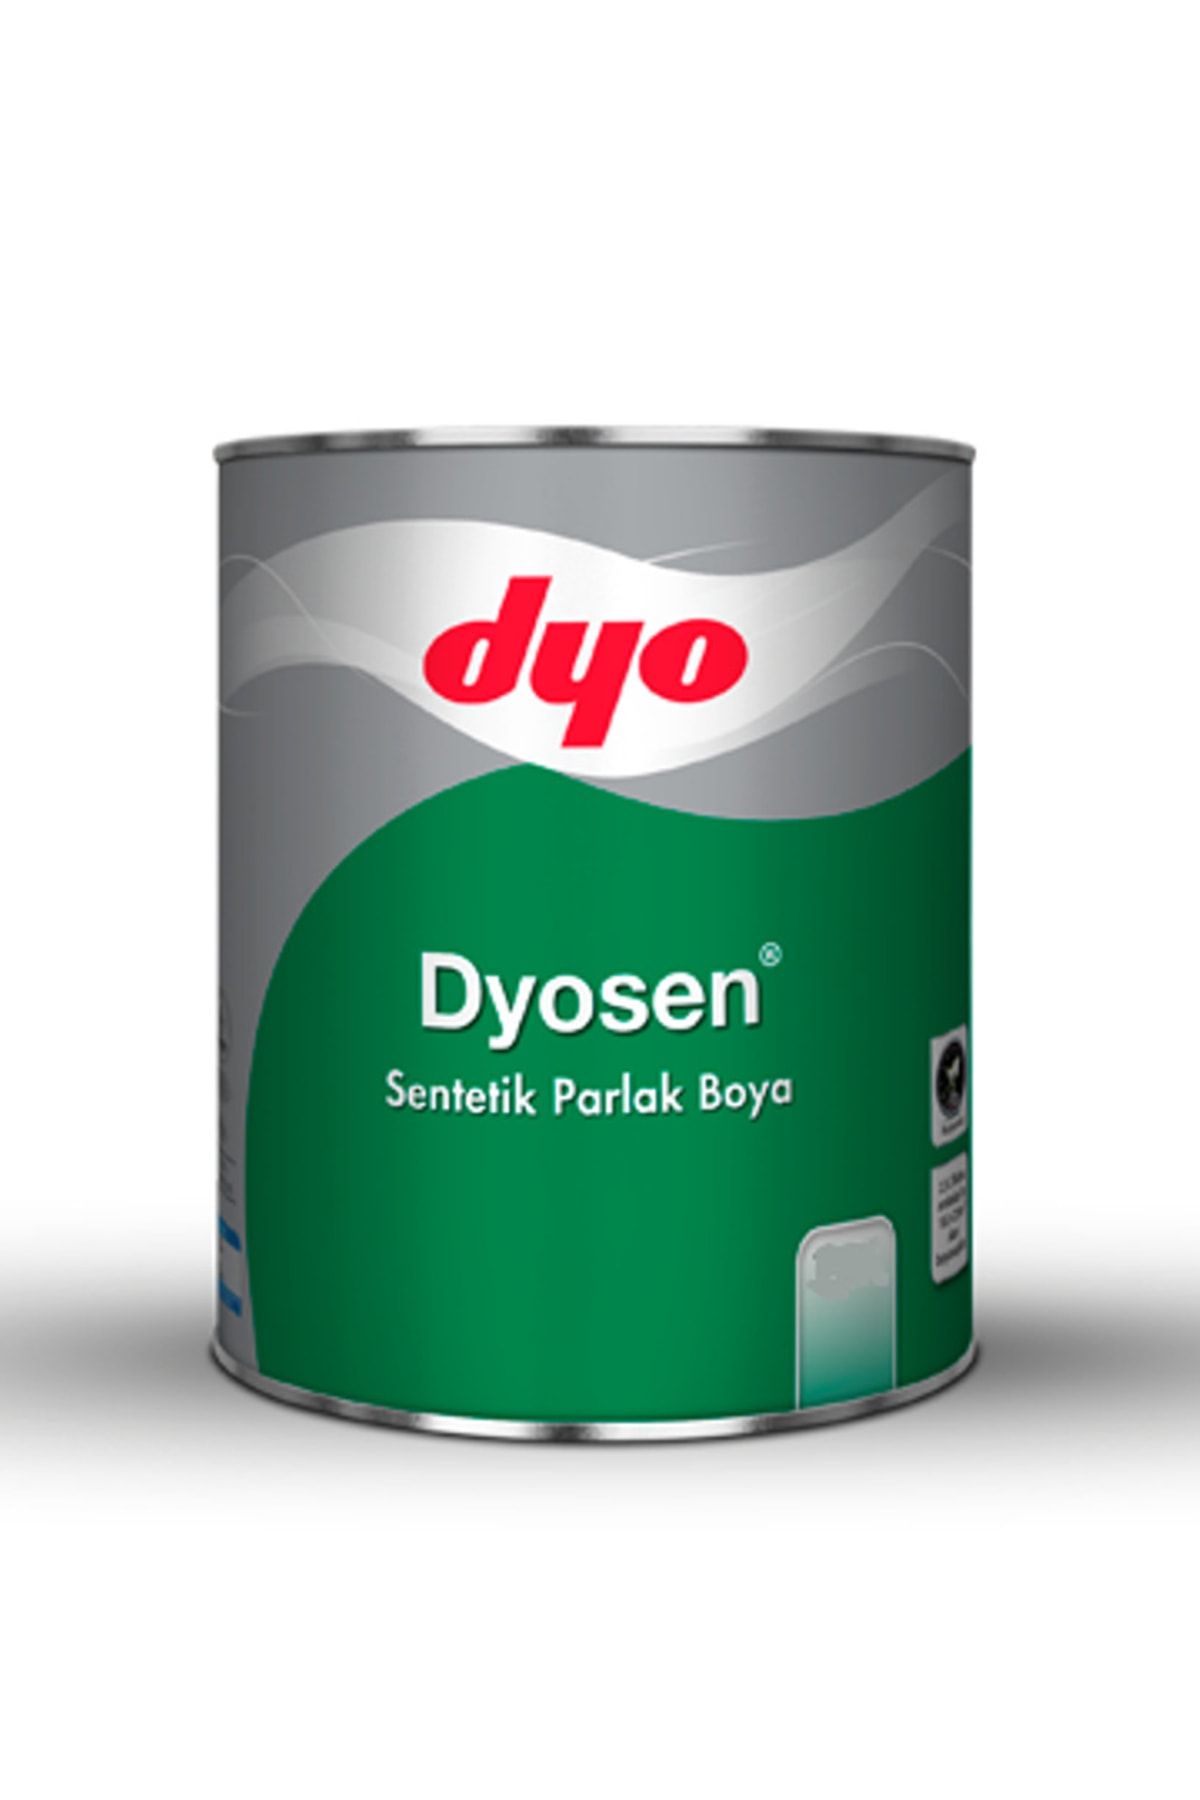 Dyo Dyosen Sentetik Parlak Boya 2,5 litre (Vişne)